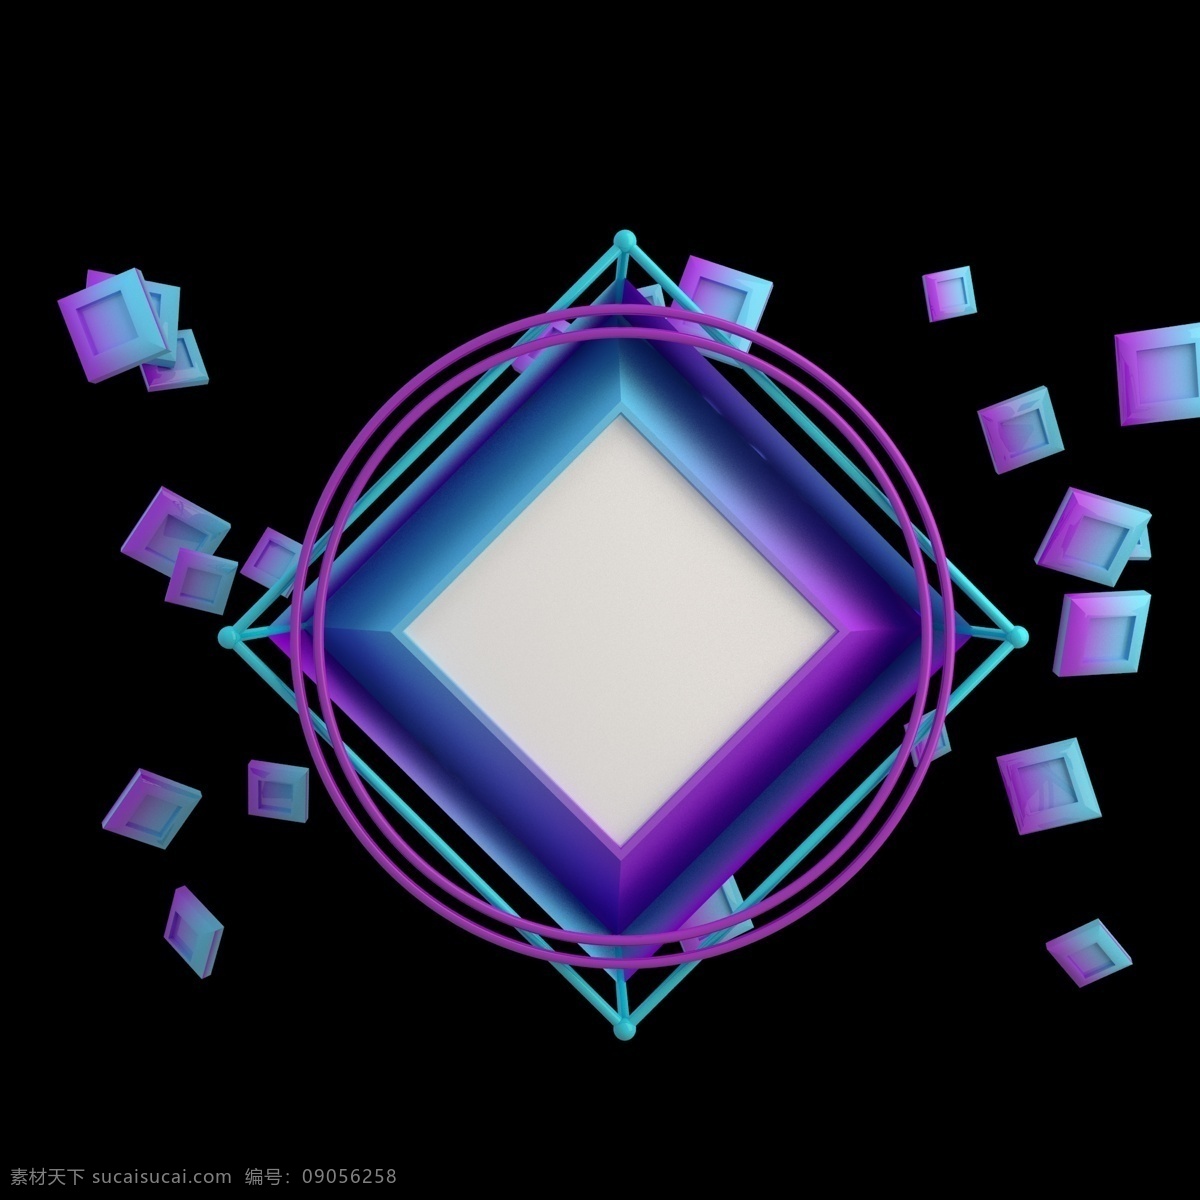 c4d 绚丽 色彩 舞台 元素 立体 蓝色 青色 紫色 渐变 方形 圆环 双十一 双11 电商 装饰 促销活动 正方形 几何